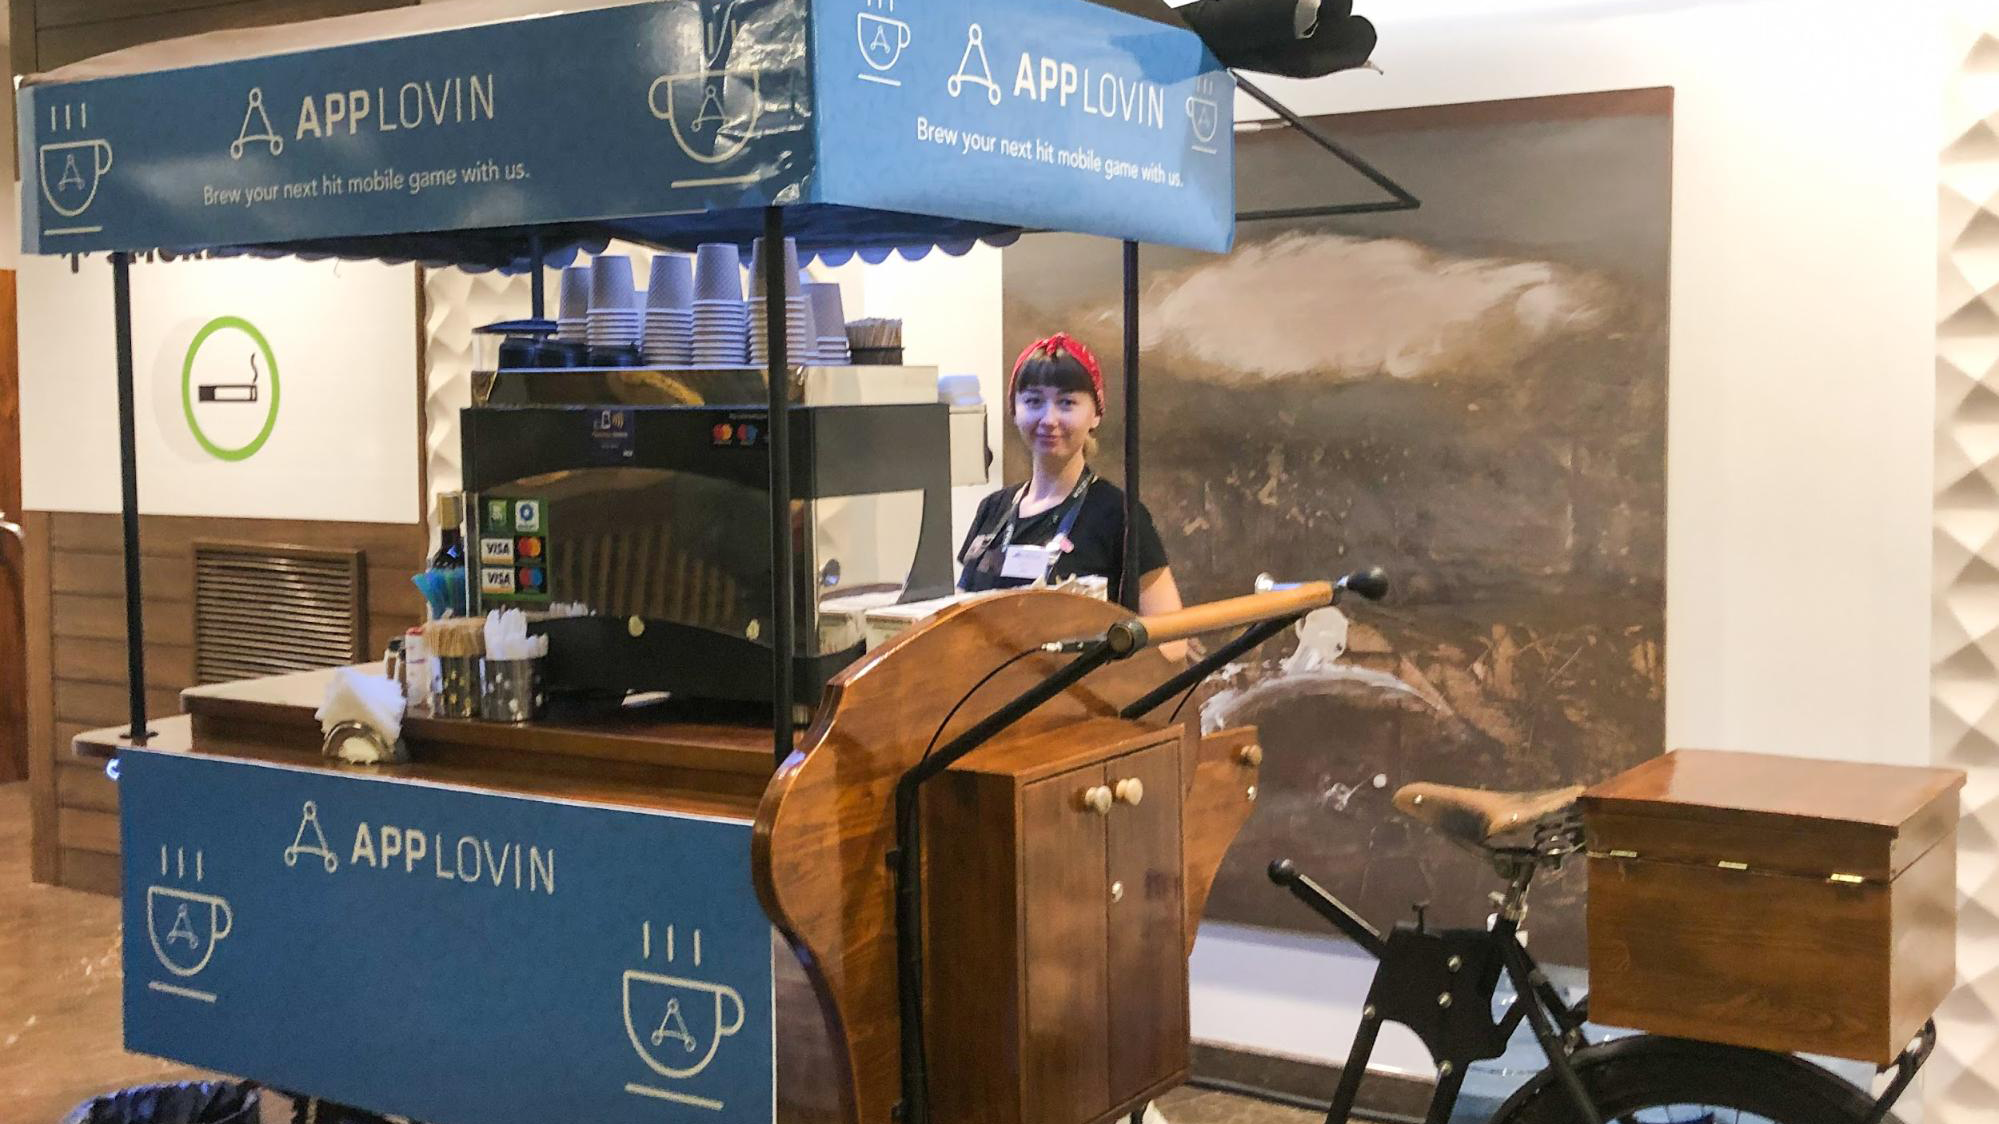 DevGamm AppLovin coffee cart